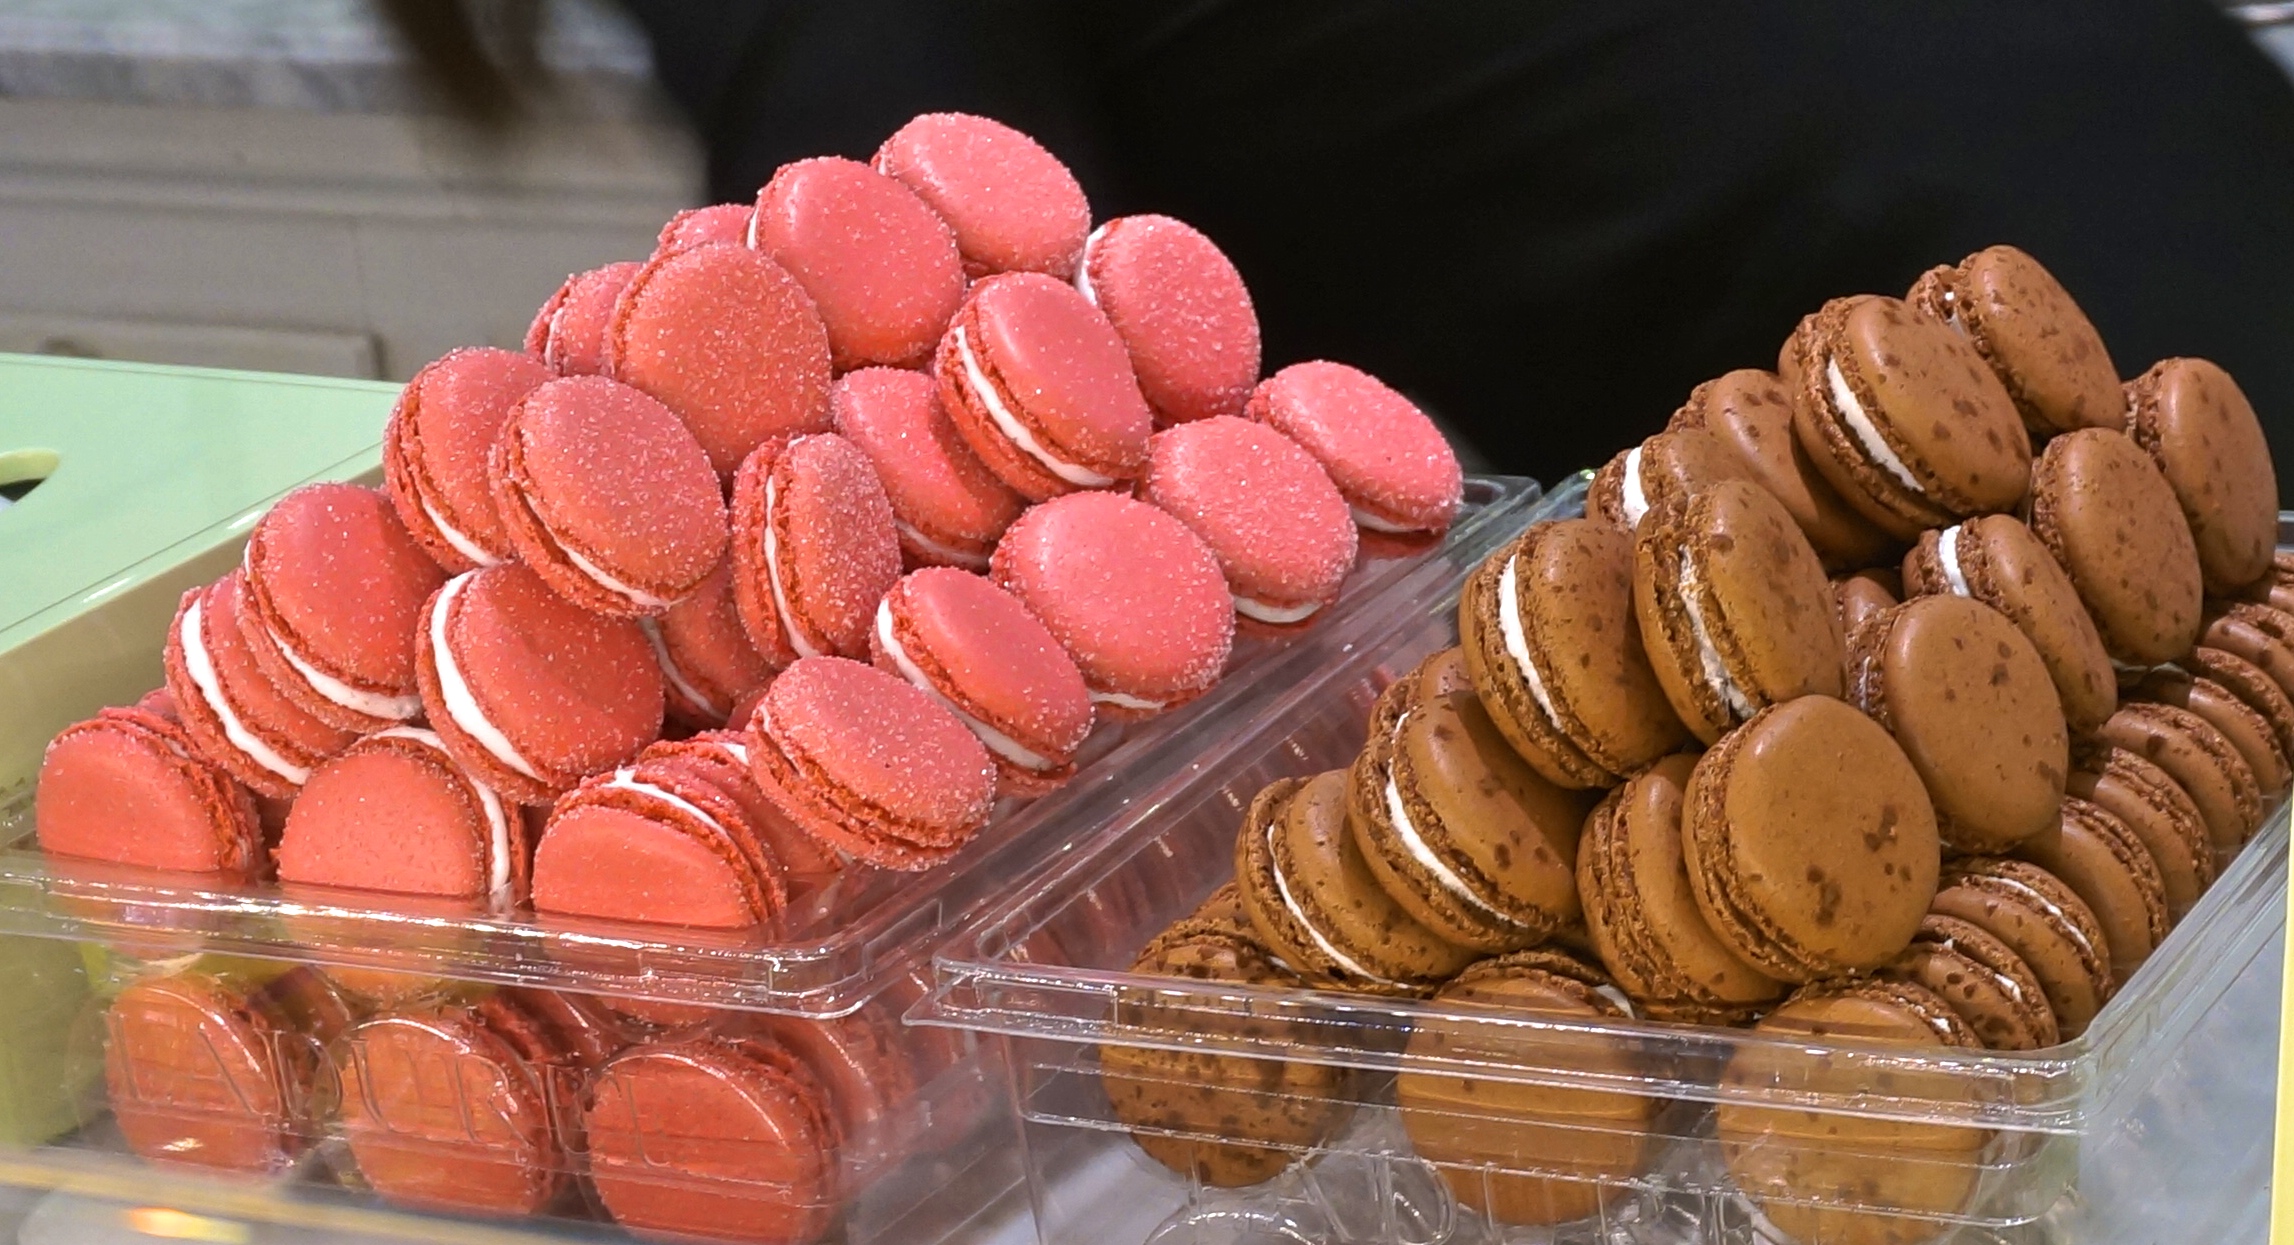 Ladurée Macarons in Paris: Worth bringing home as a souvenir?